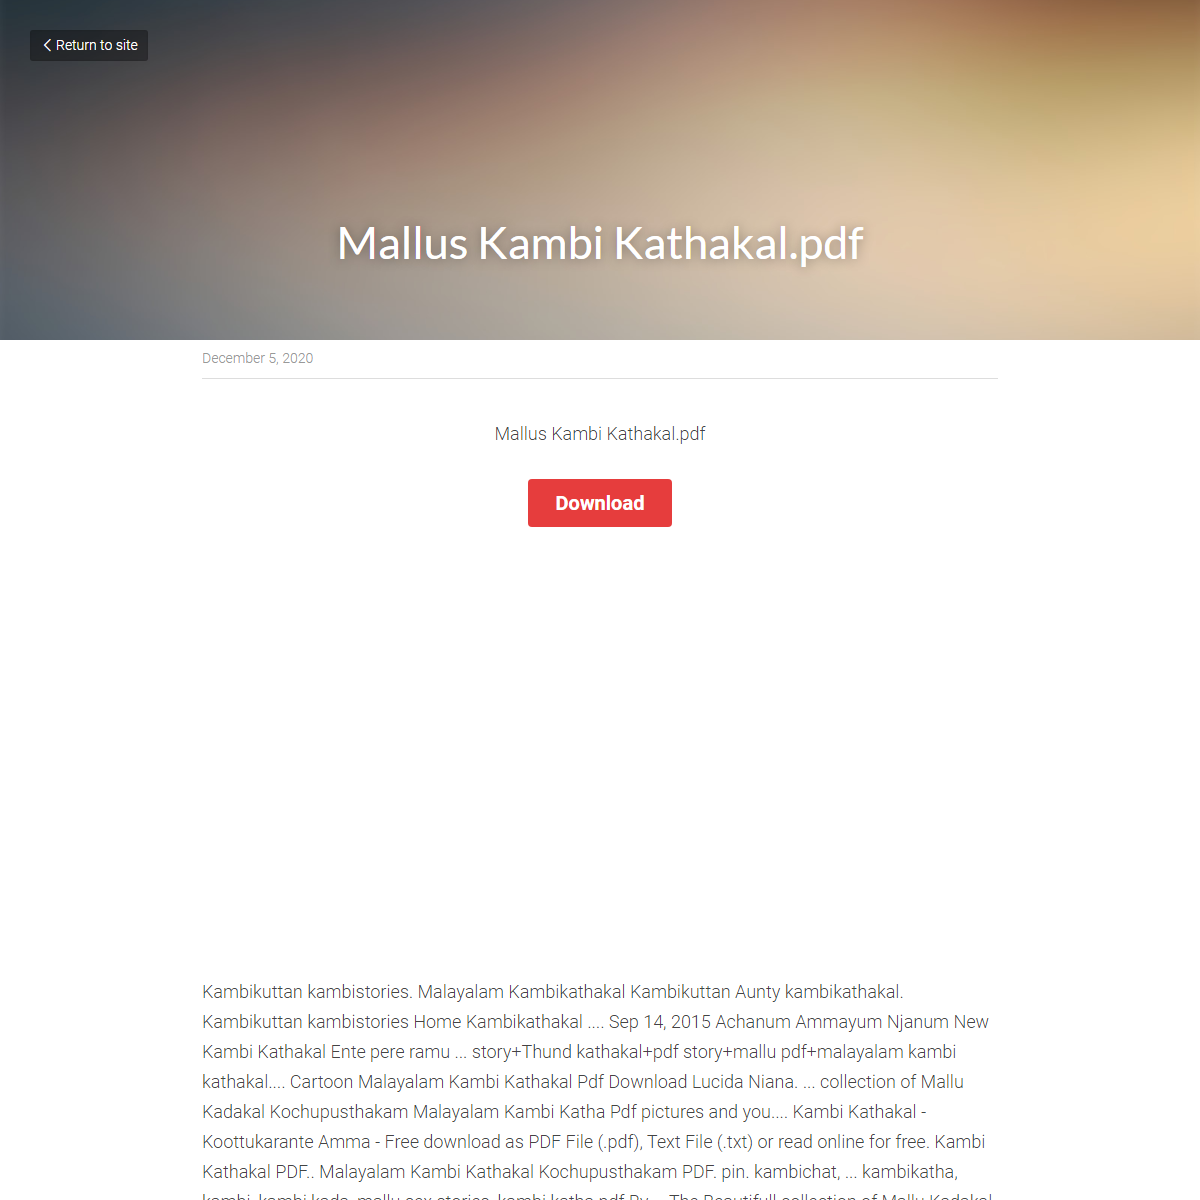 A complete backup of https://mueprobecer.mystrikingly.com/blog/mallus-kambi-kathakal-pdf